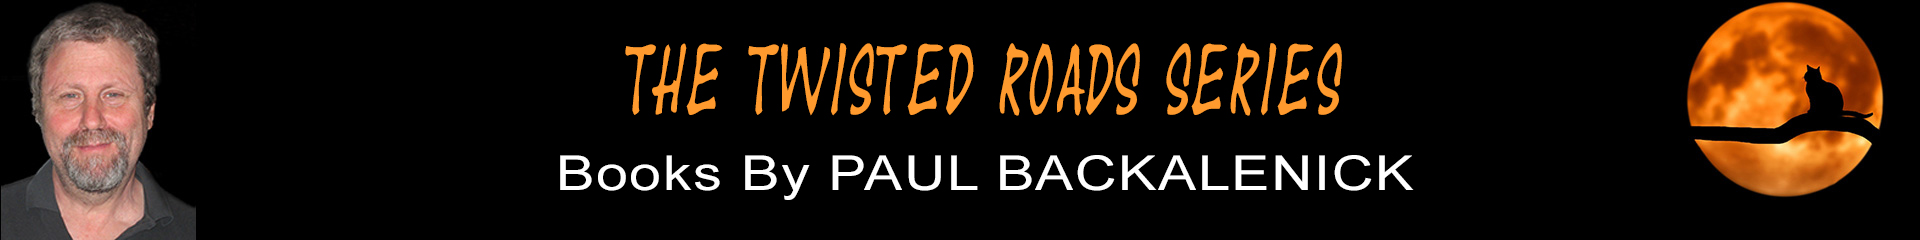 Paul Backalenick - Mystery & Suspense Writer